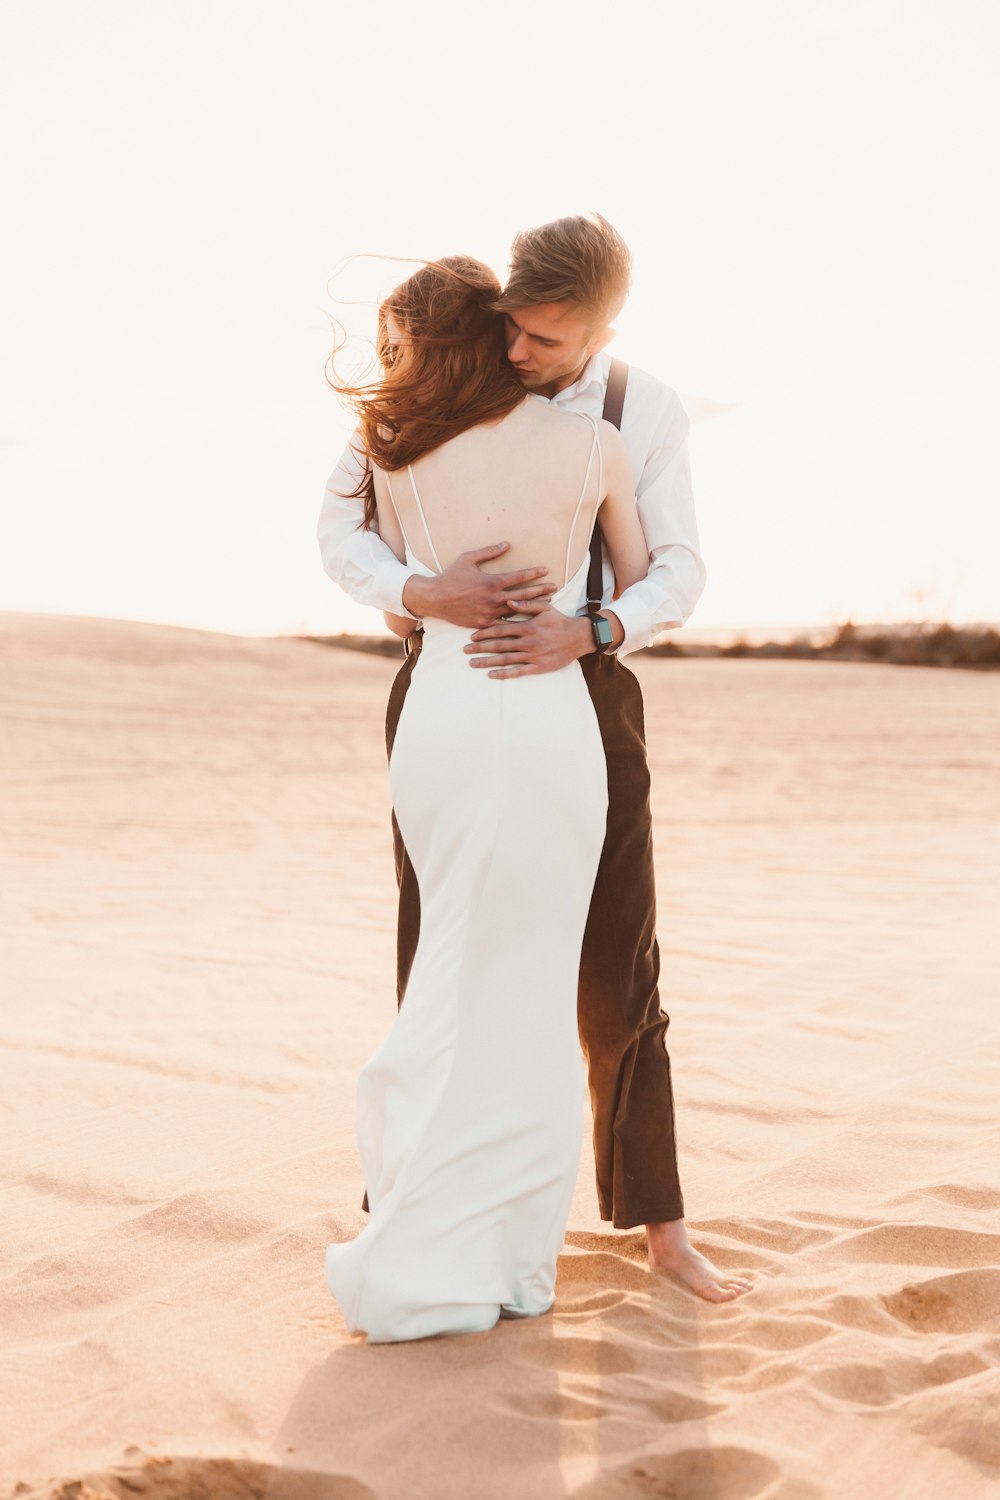 Casal se abraçando na areia do deserto